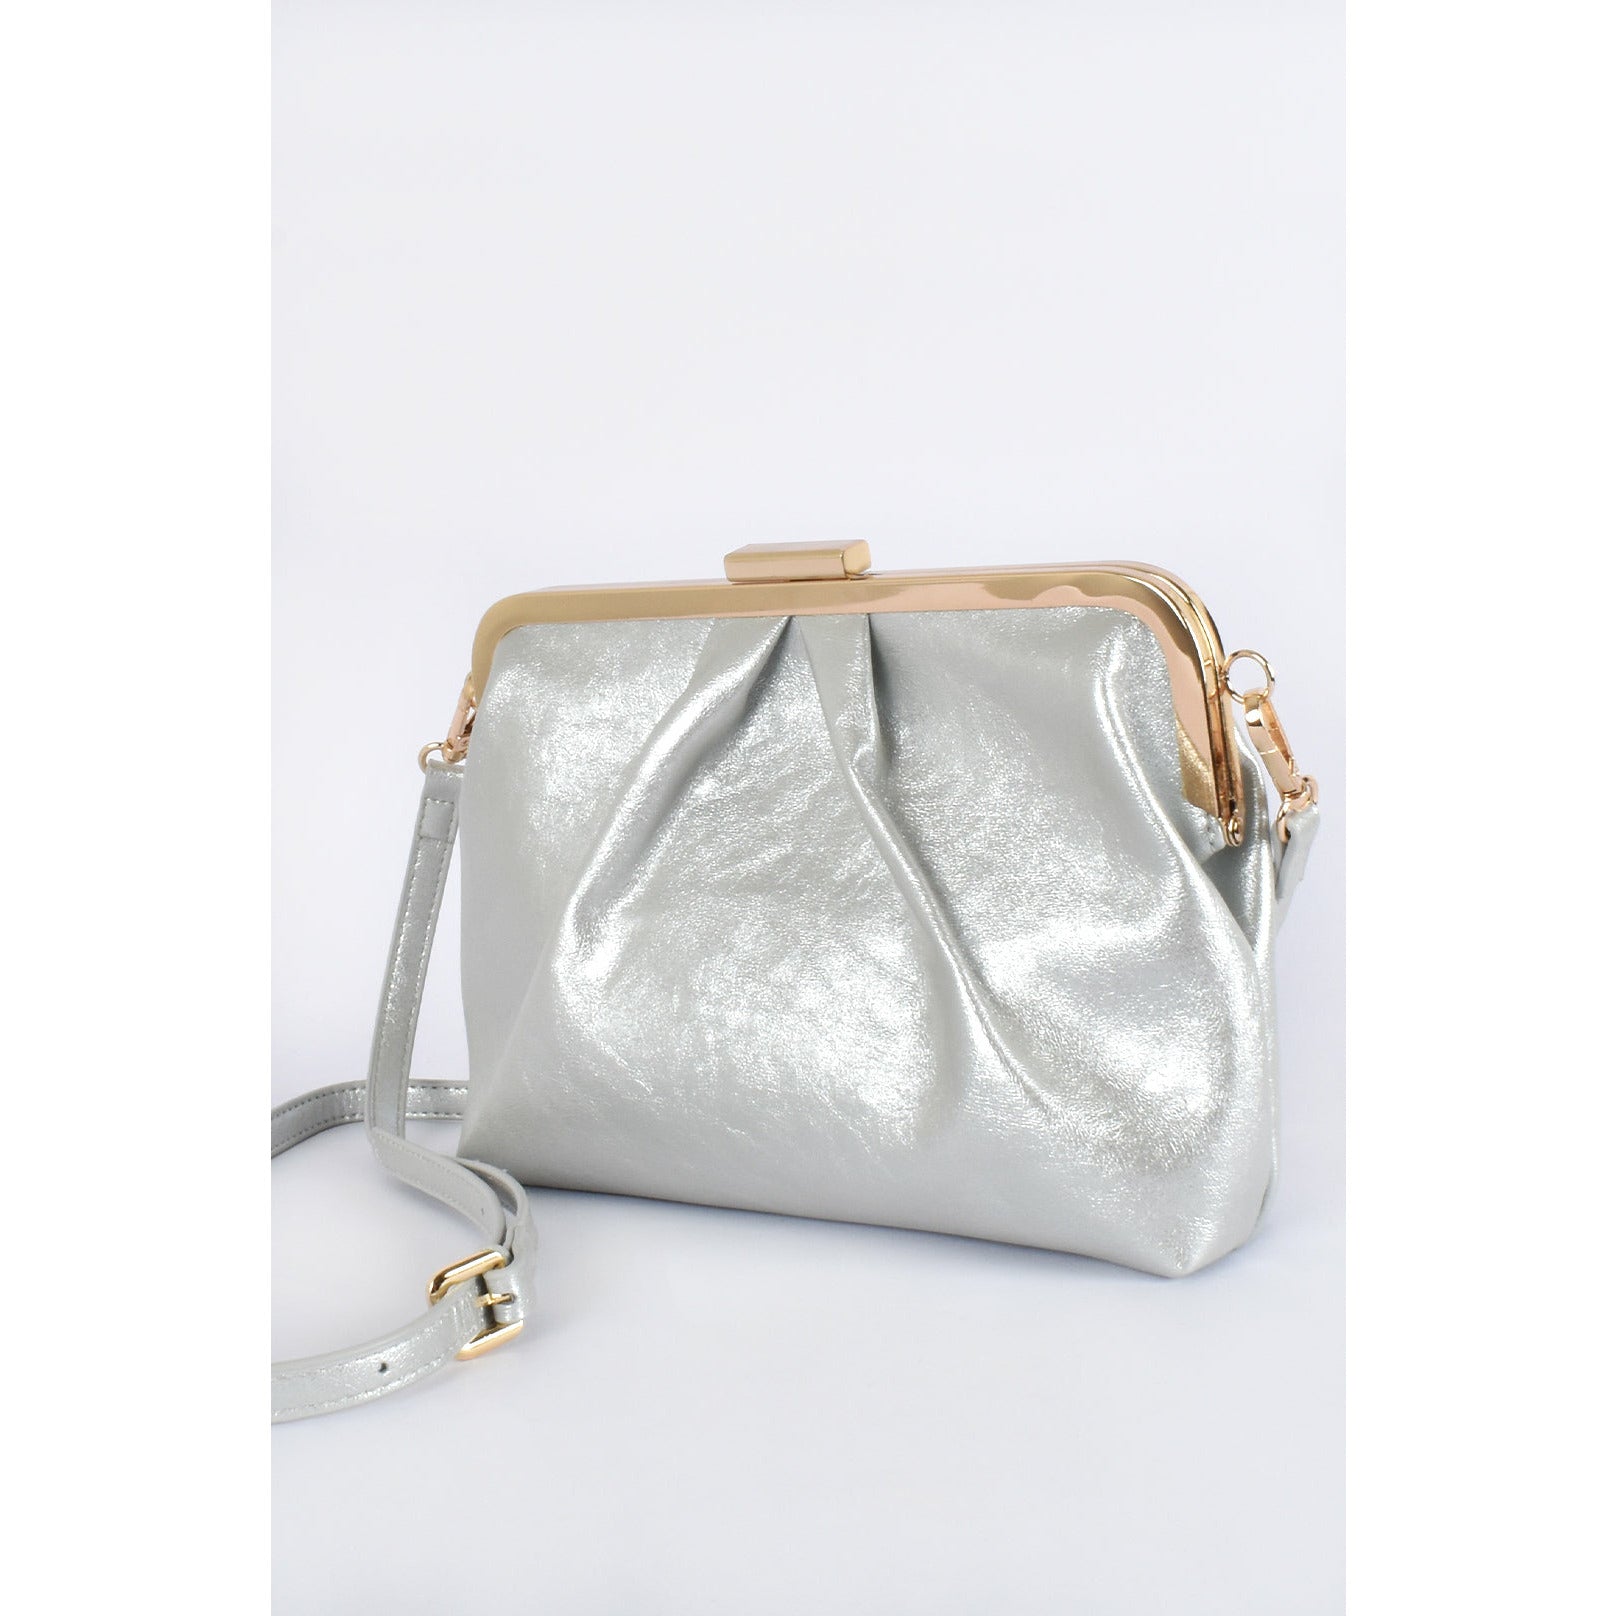 NWT Isabelle Vegan Leather Crossbody Handbag Tan 